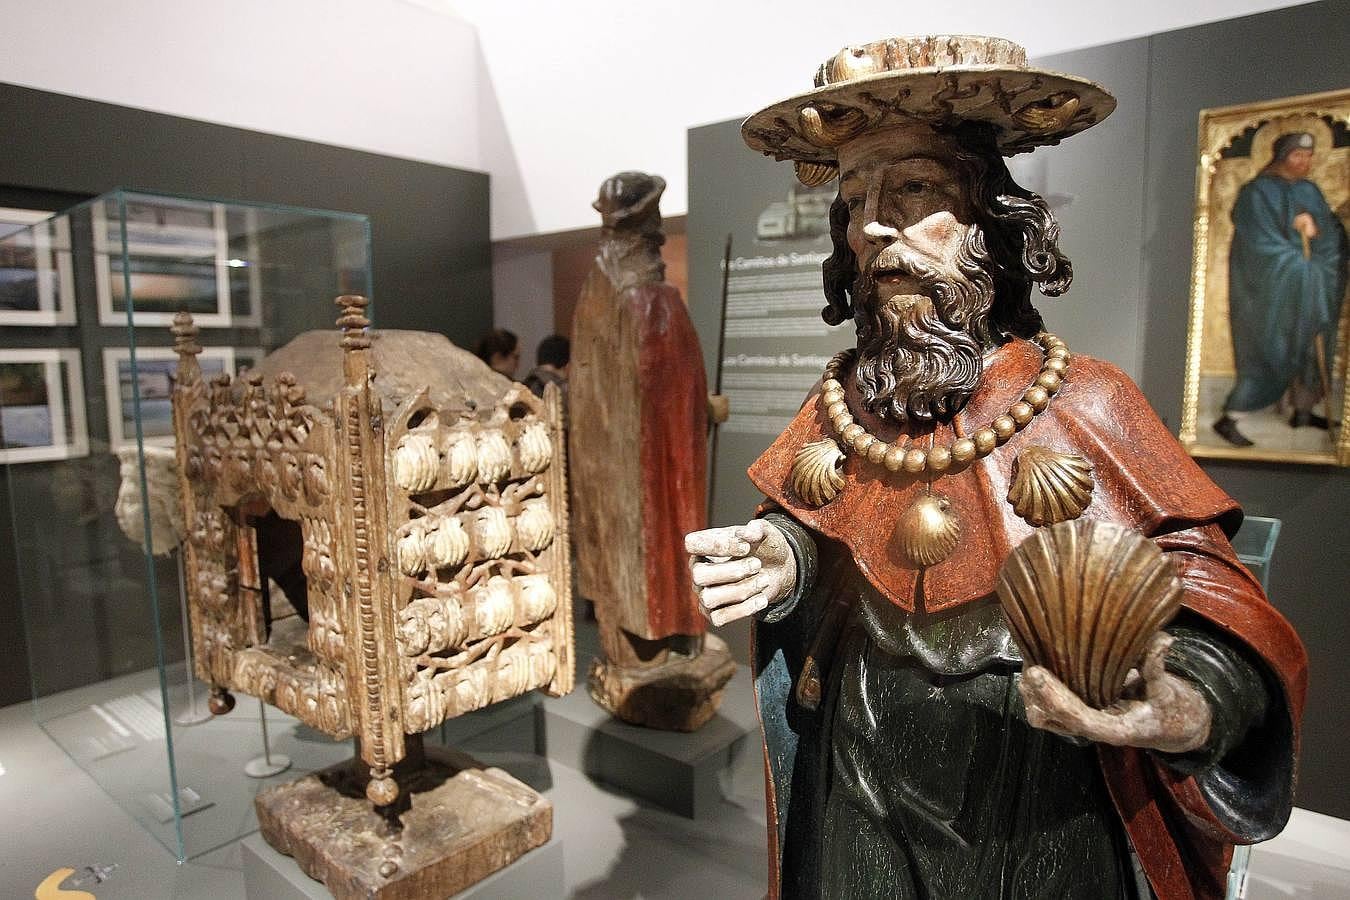 Comparten espacio obras singulares como este sagrario en madera cubierto de vieiras o un Santiago con sombrero procedente de Alemania